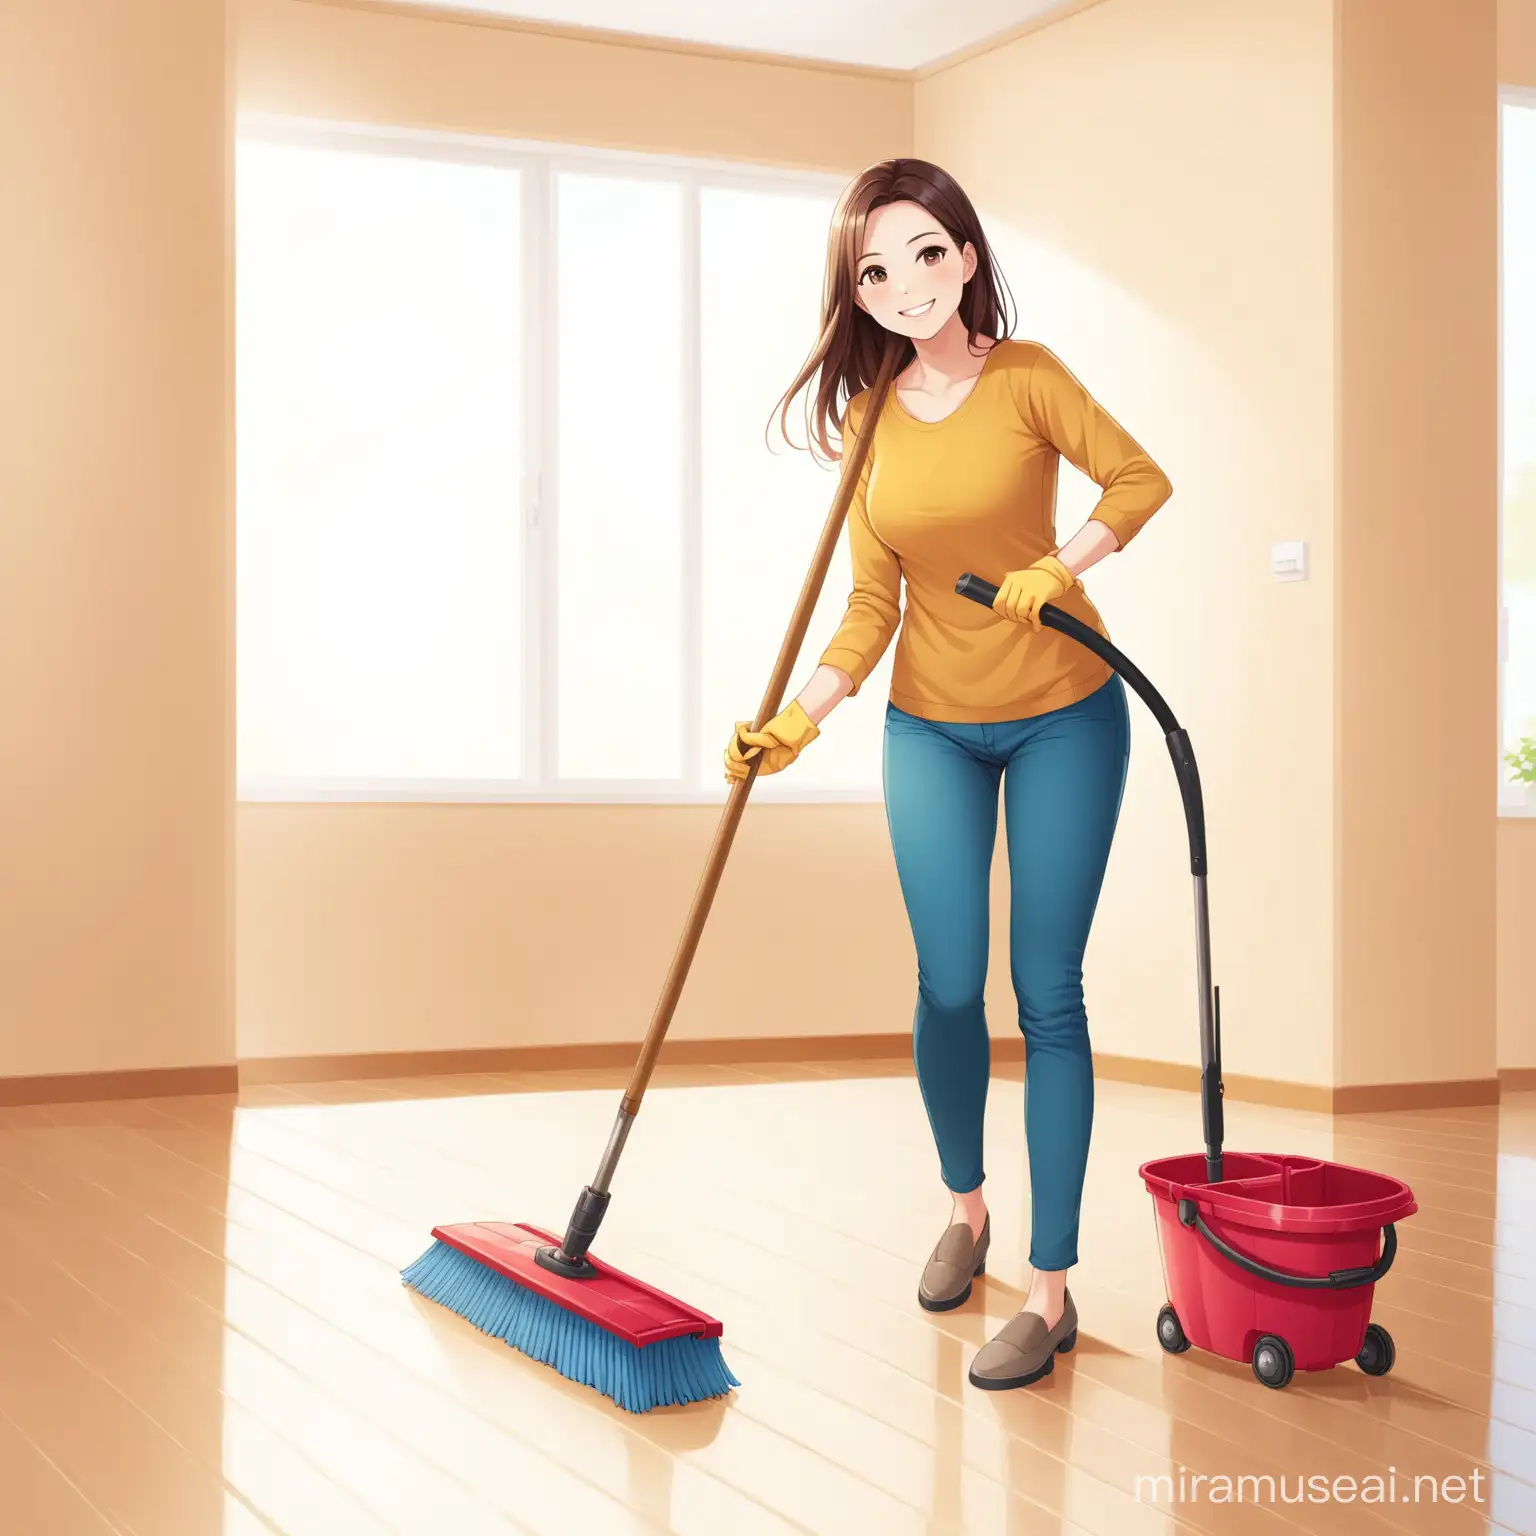 Joyful Woman Sweeping Floor with Broom